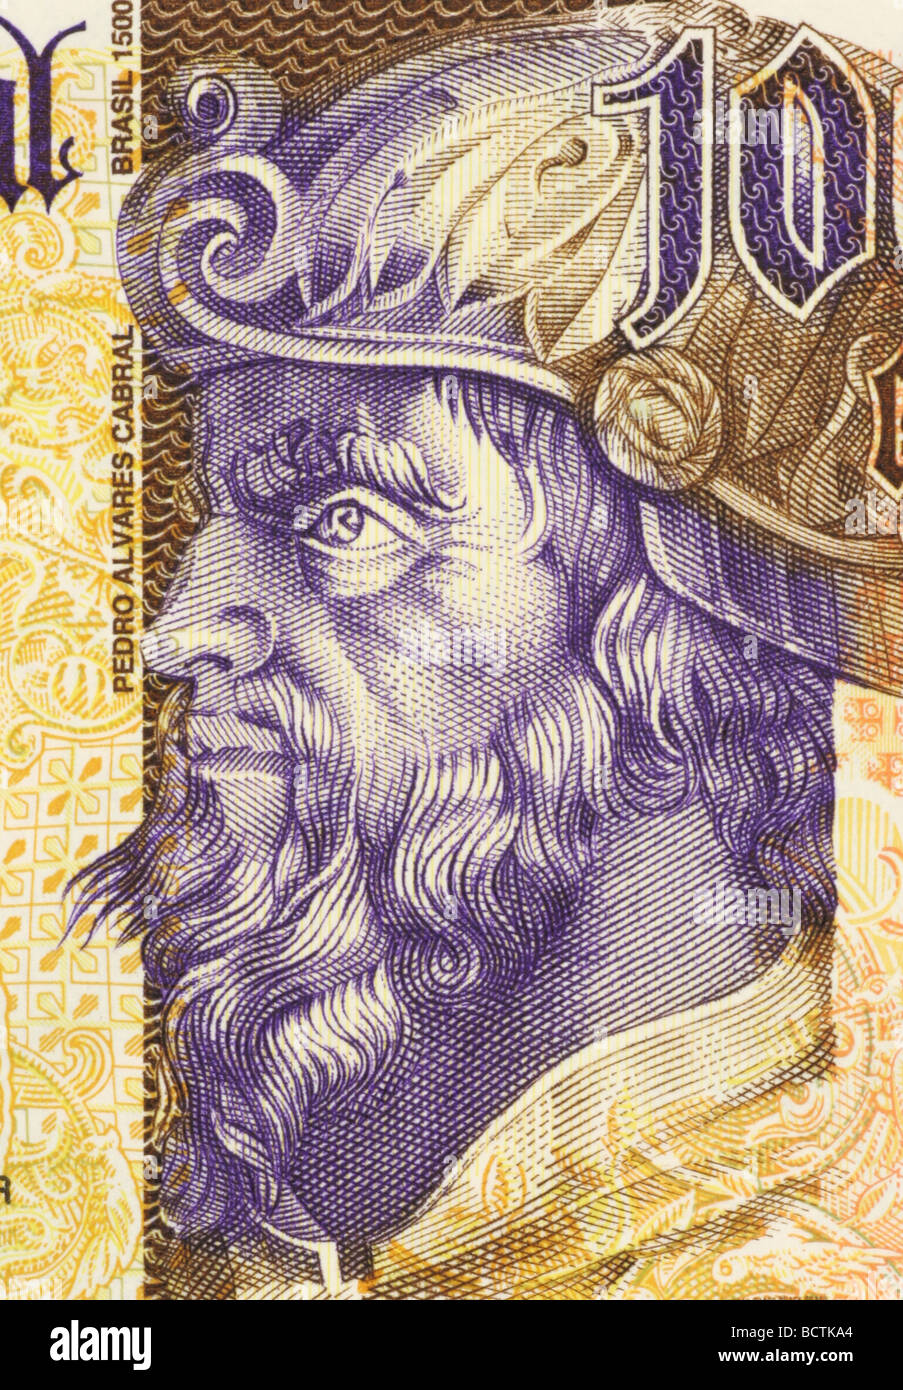 Pedro Alvares Cabral on 1000 Escudos 2000 Banknote from Portugal Stock Photo